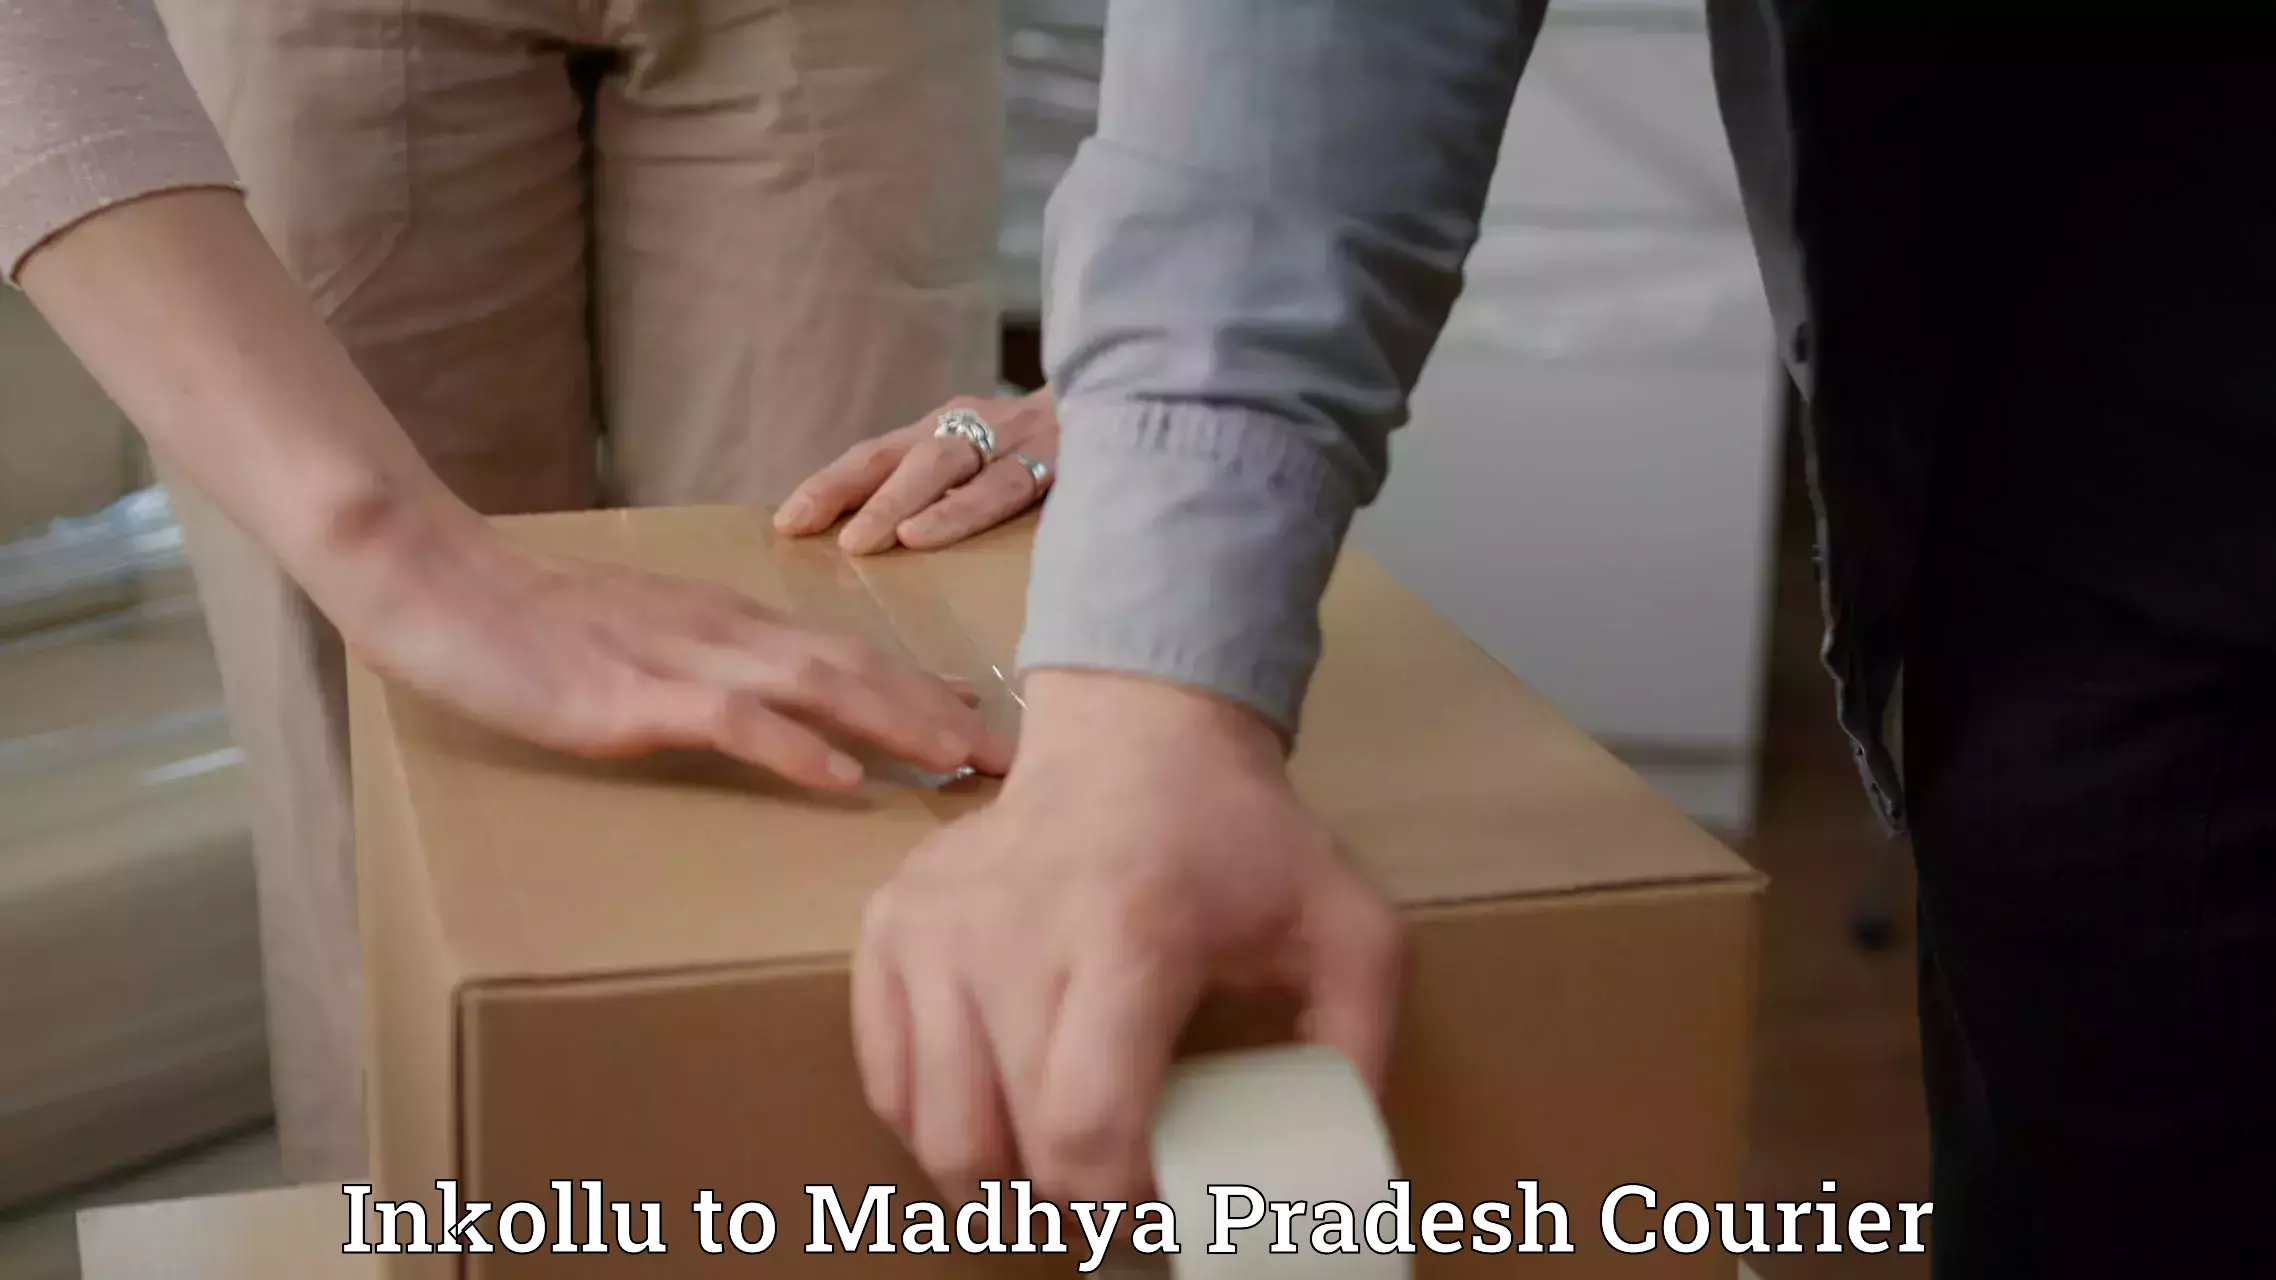 Courier service innovation Inkollu to Madhya Pradesh